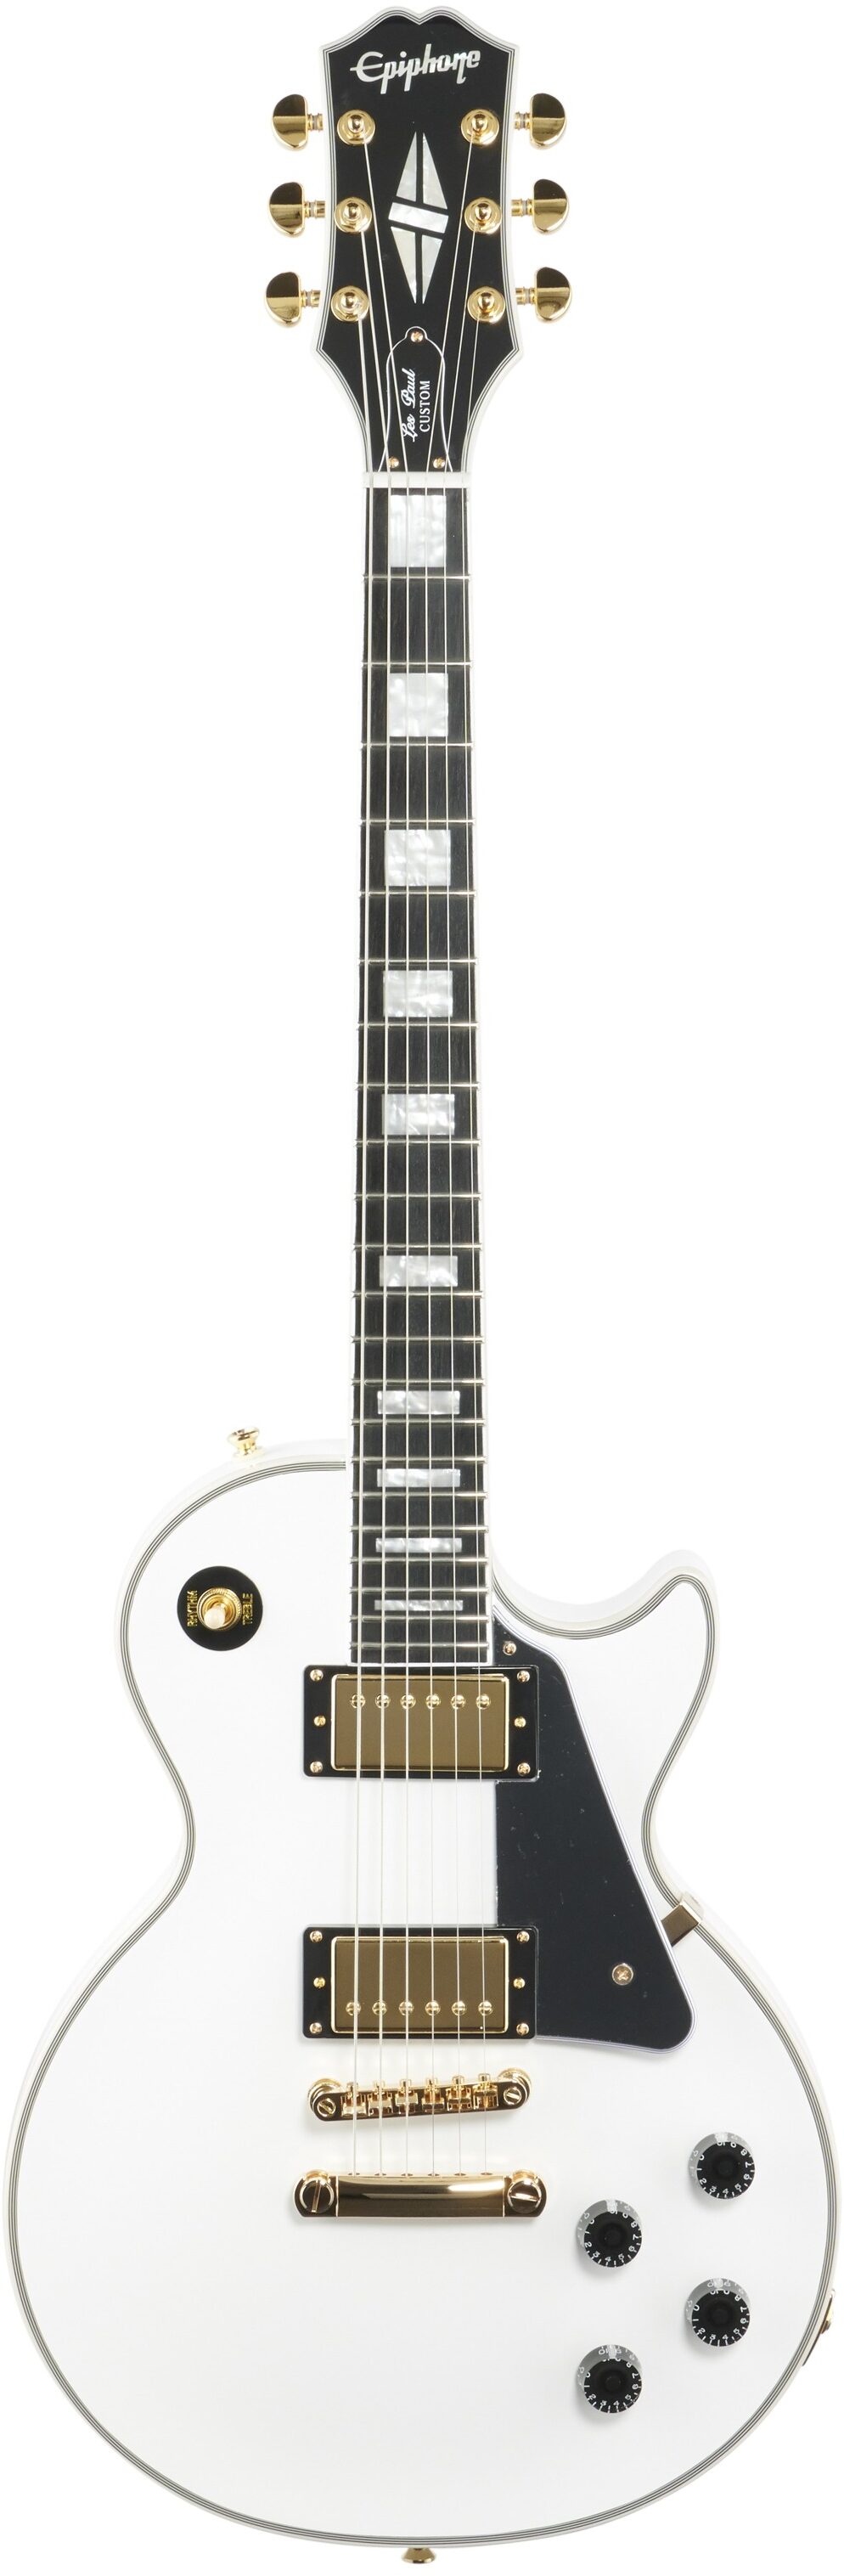 Epiphone Les Paul Custom Electric Guitar | zZounds